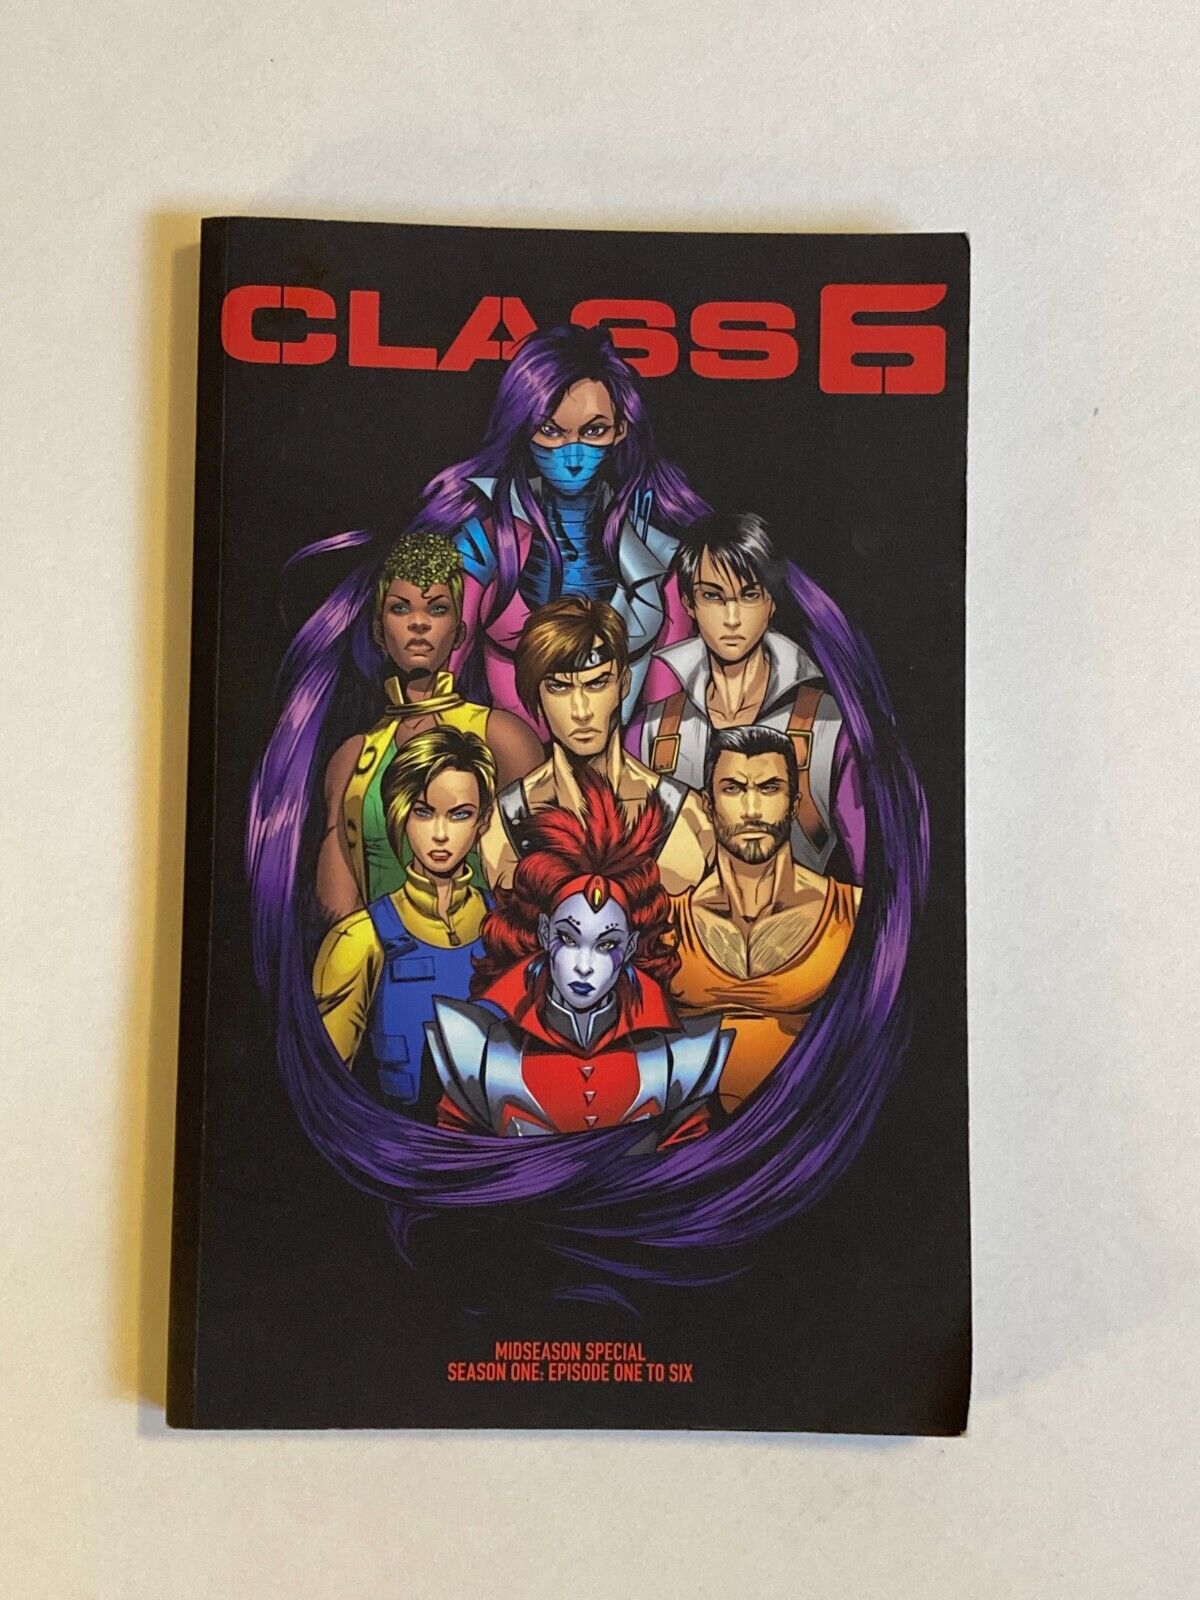 Class6: Midseason Special, Season One, Episode 1-6; Kraven Comics, VG+